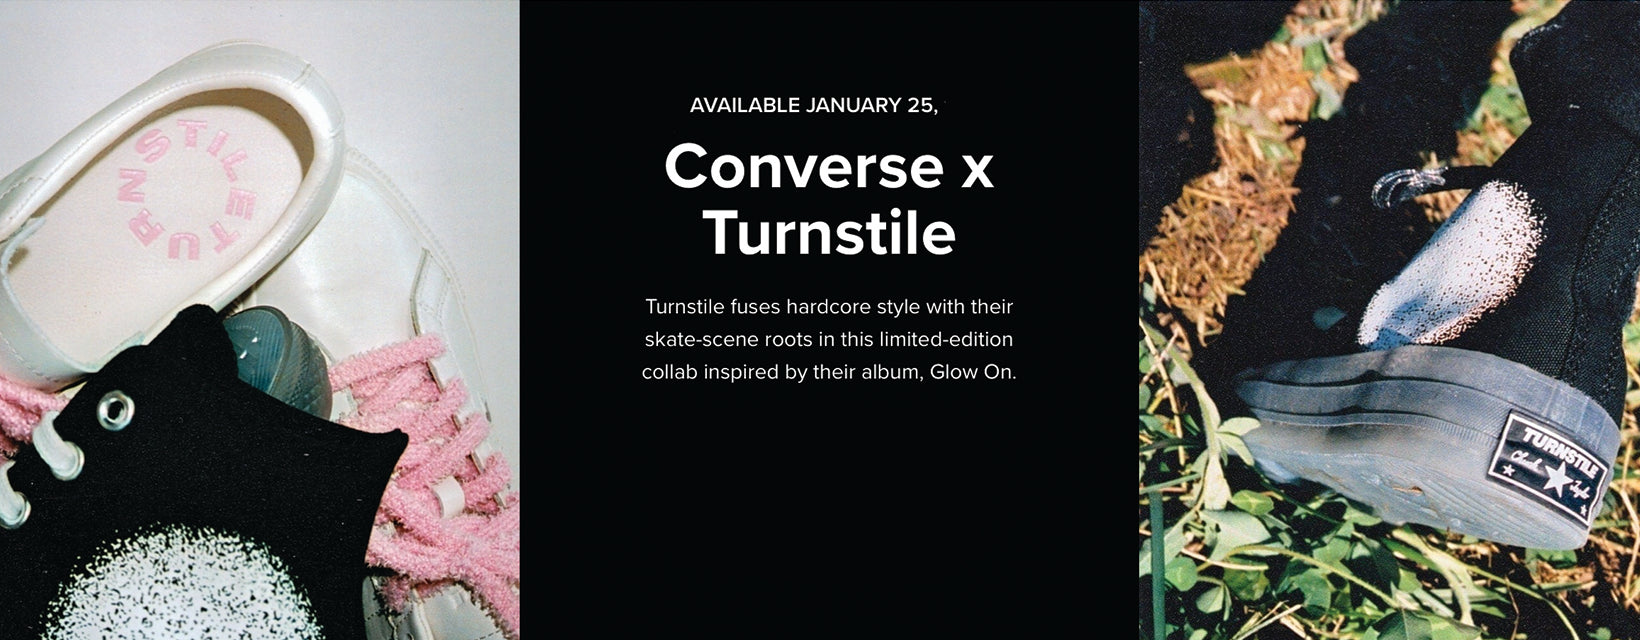 Converse x Turnstile